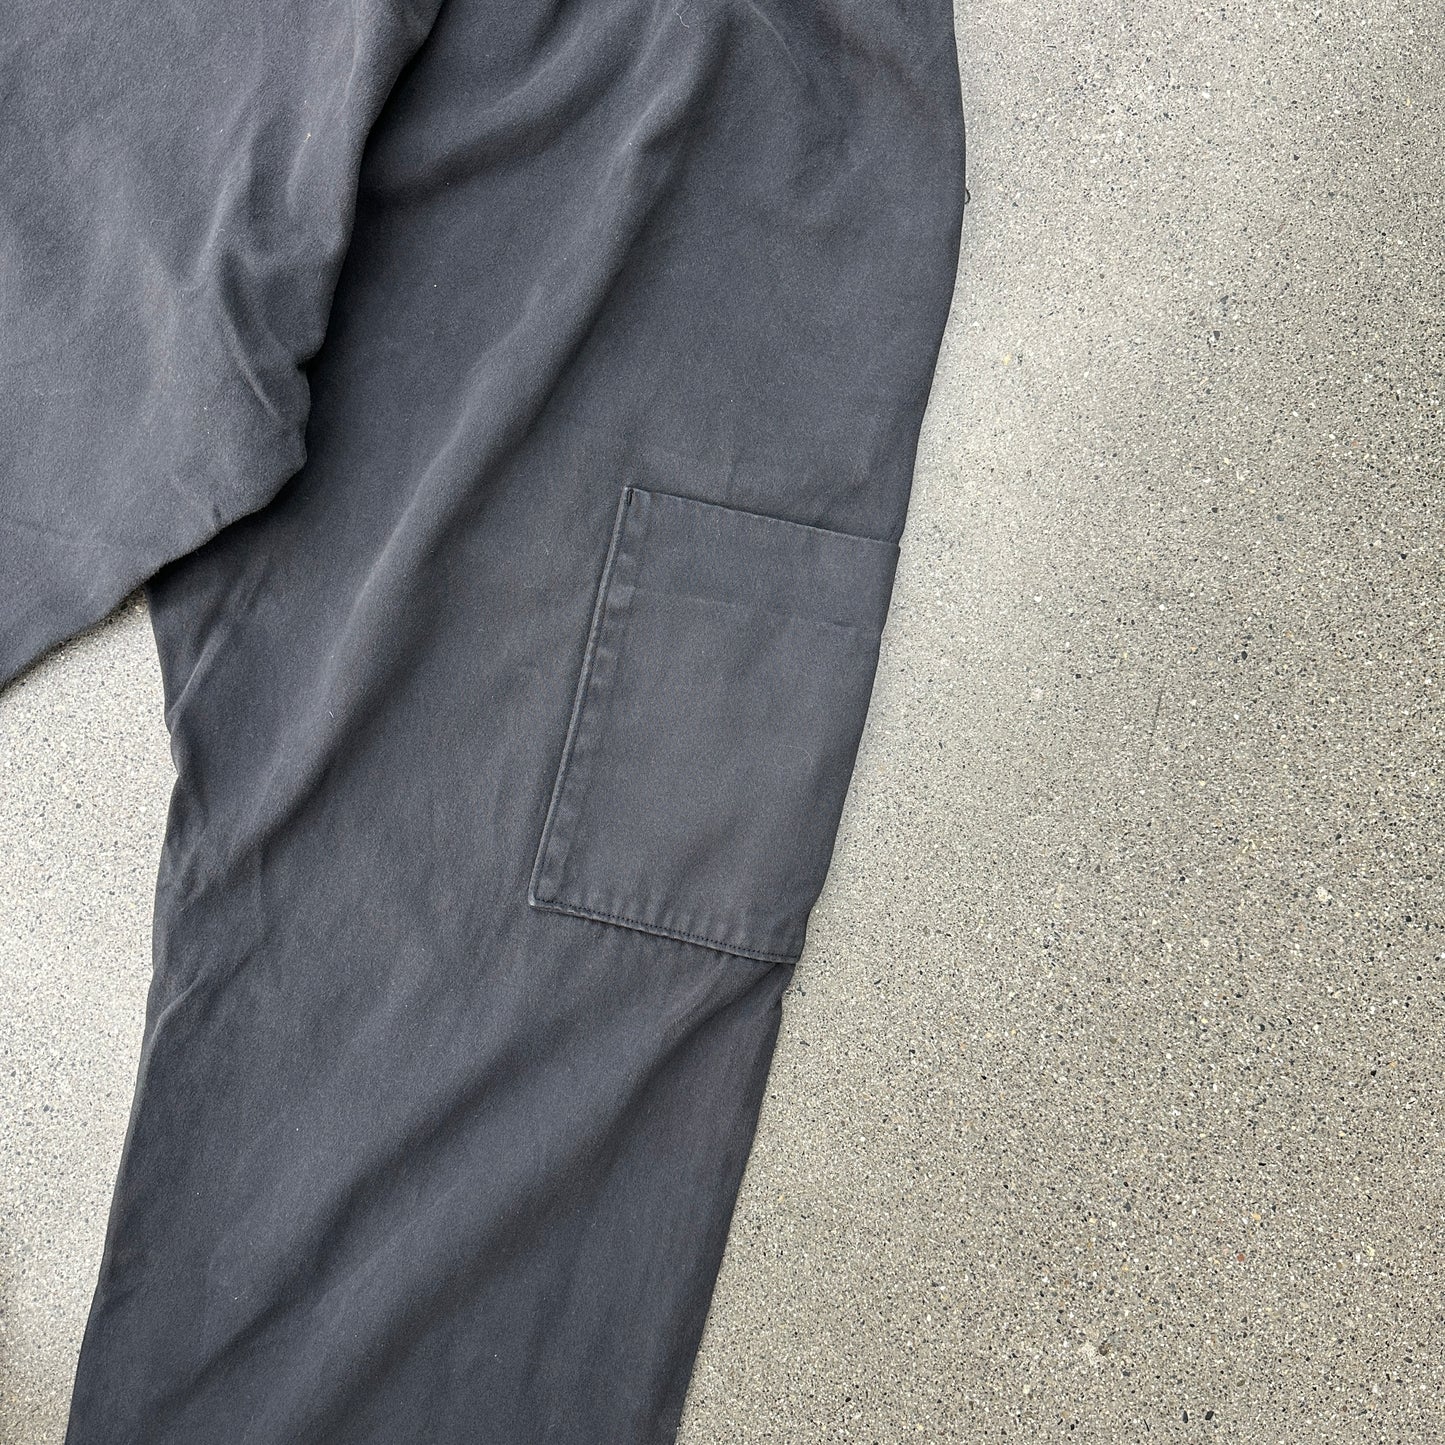 Yeezy Gap Sateen Cargo Pants Black (Multiple Sizes)